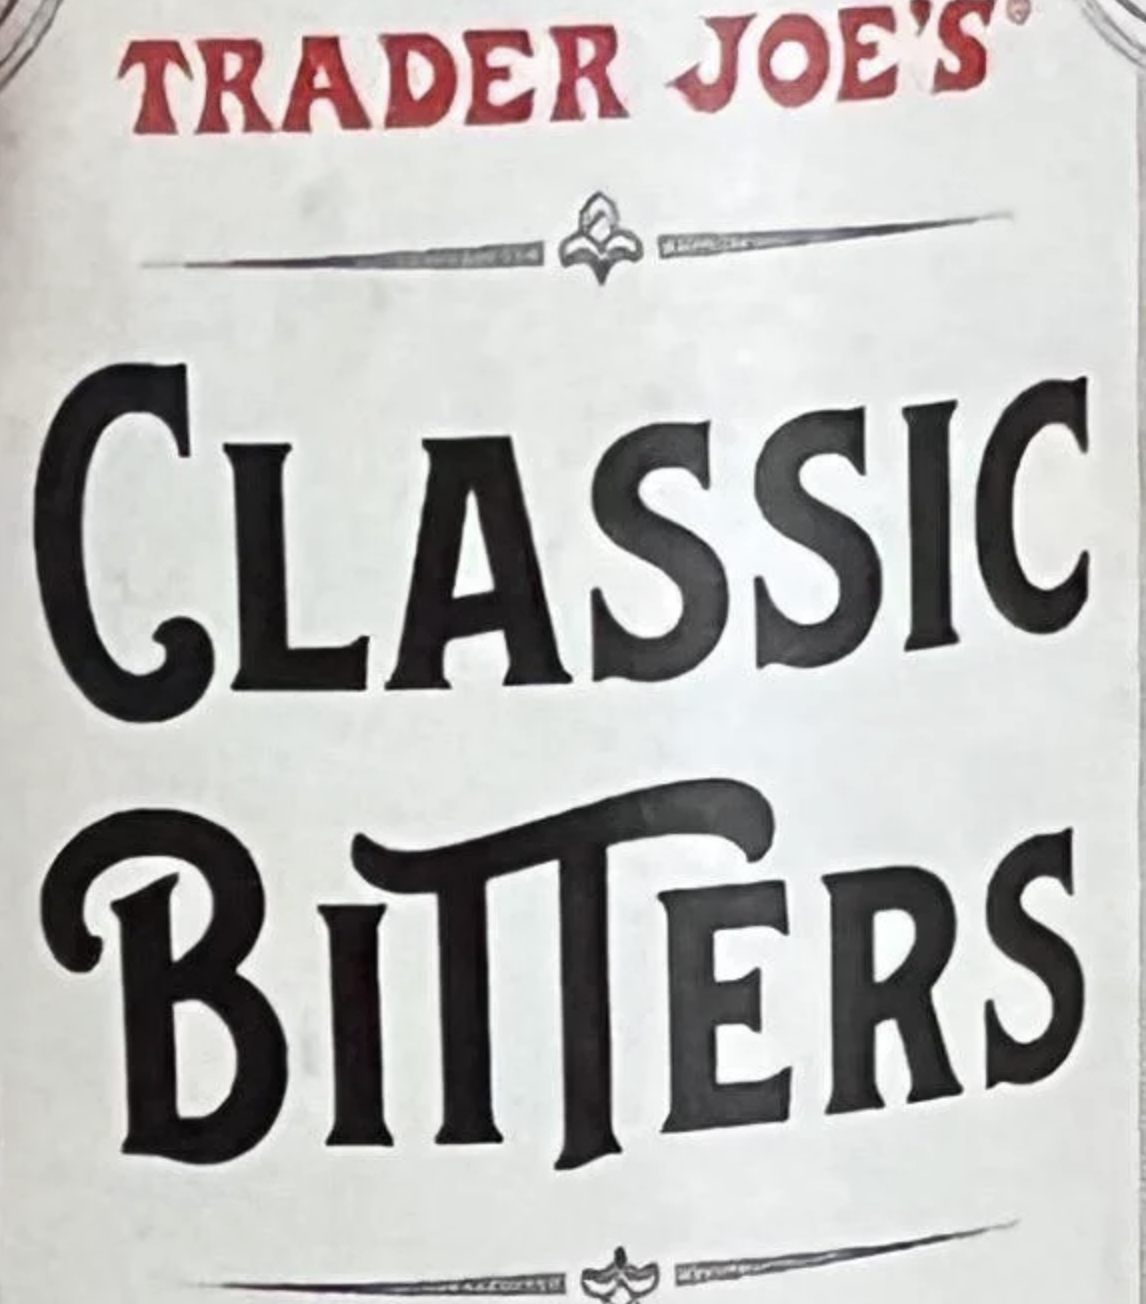 Trader Joe's Classic Bitters